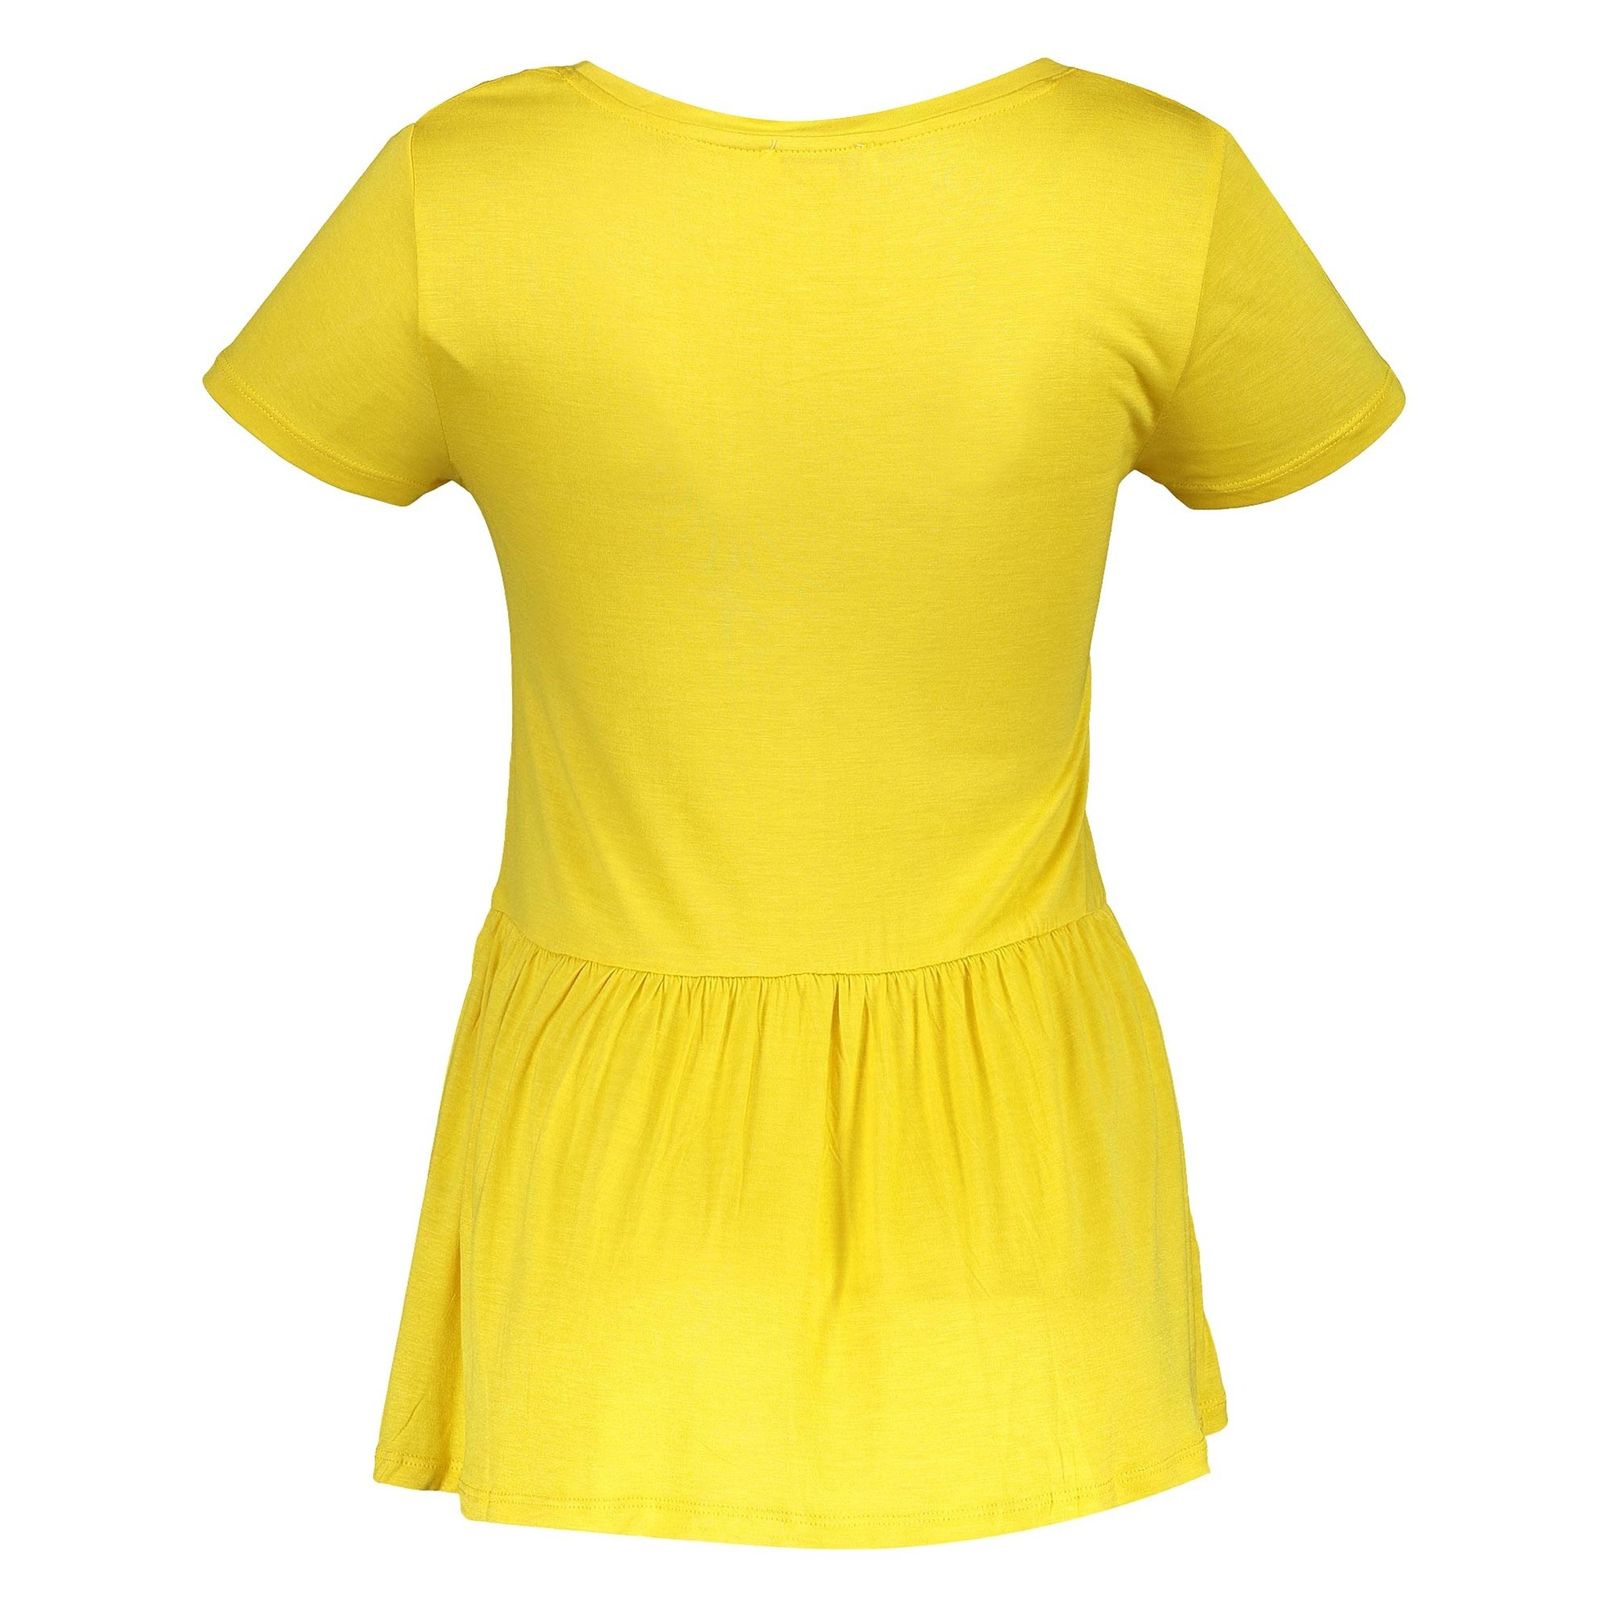 تی شرت ویسکوز یقه گرد زنانه - یوپیم - زرد  - 3